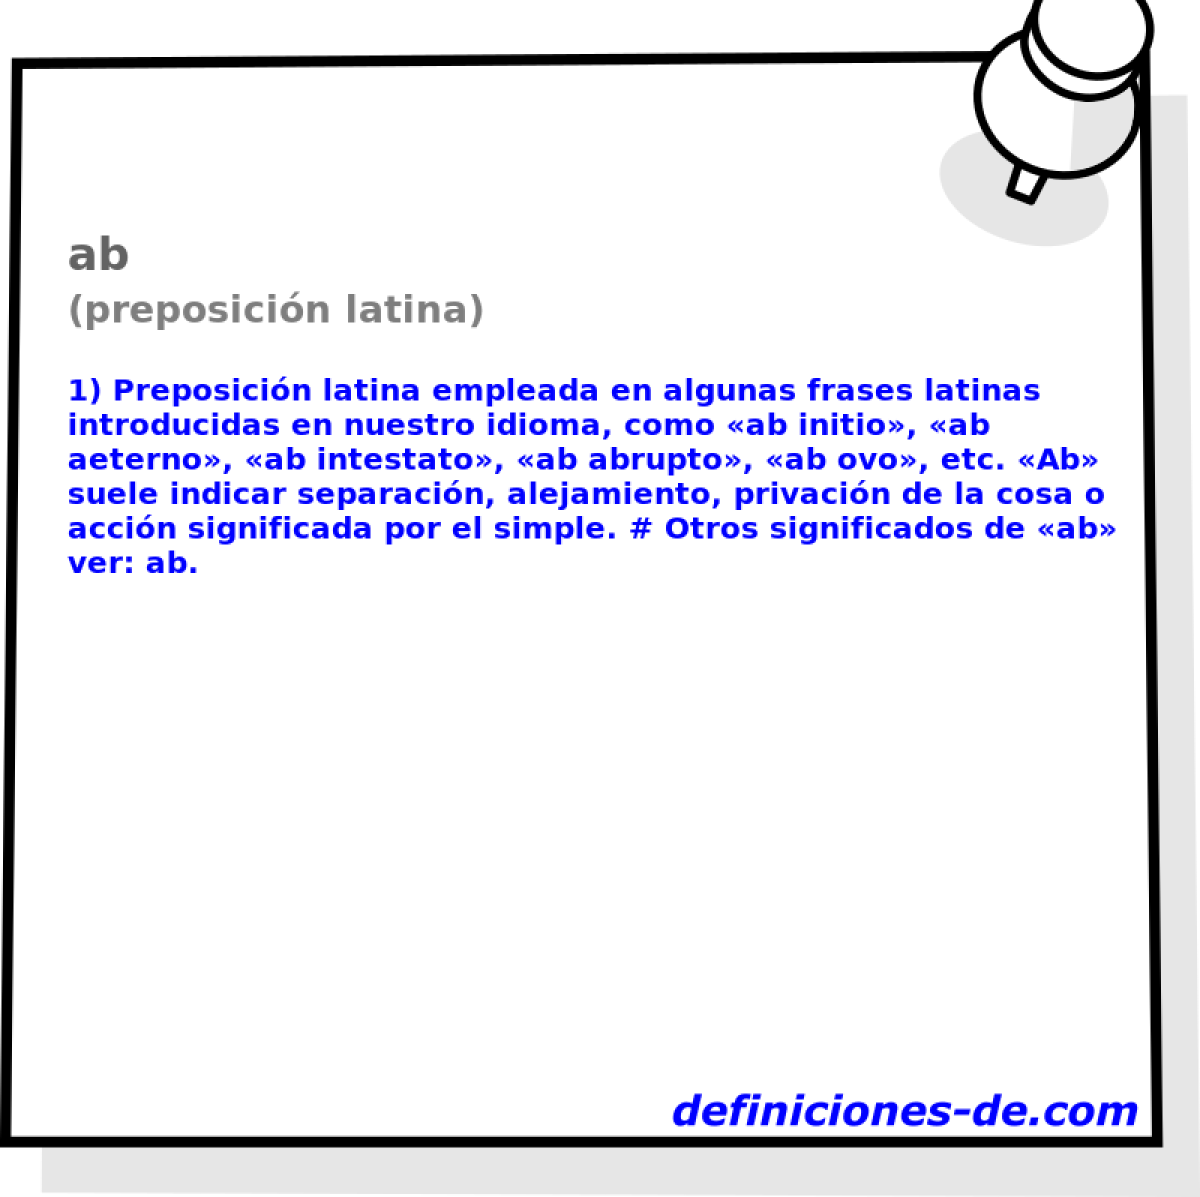 ab (preposicin latina)